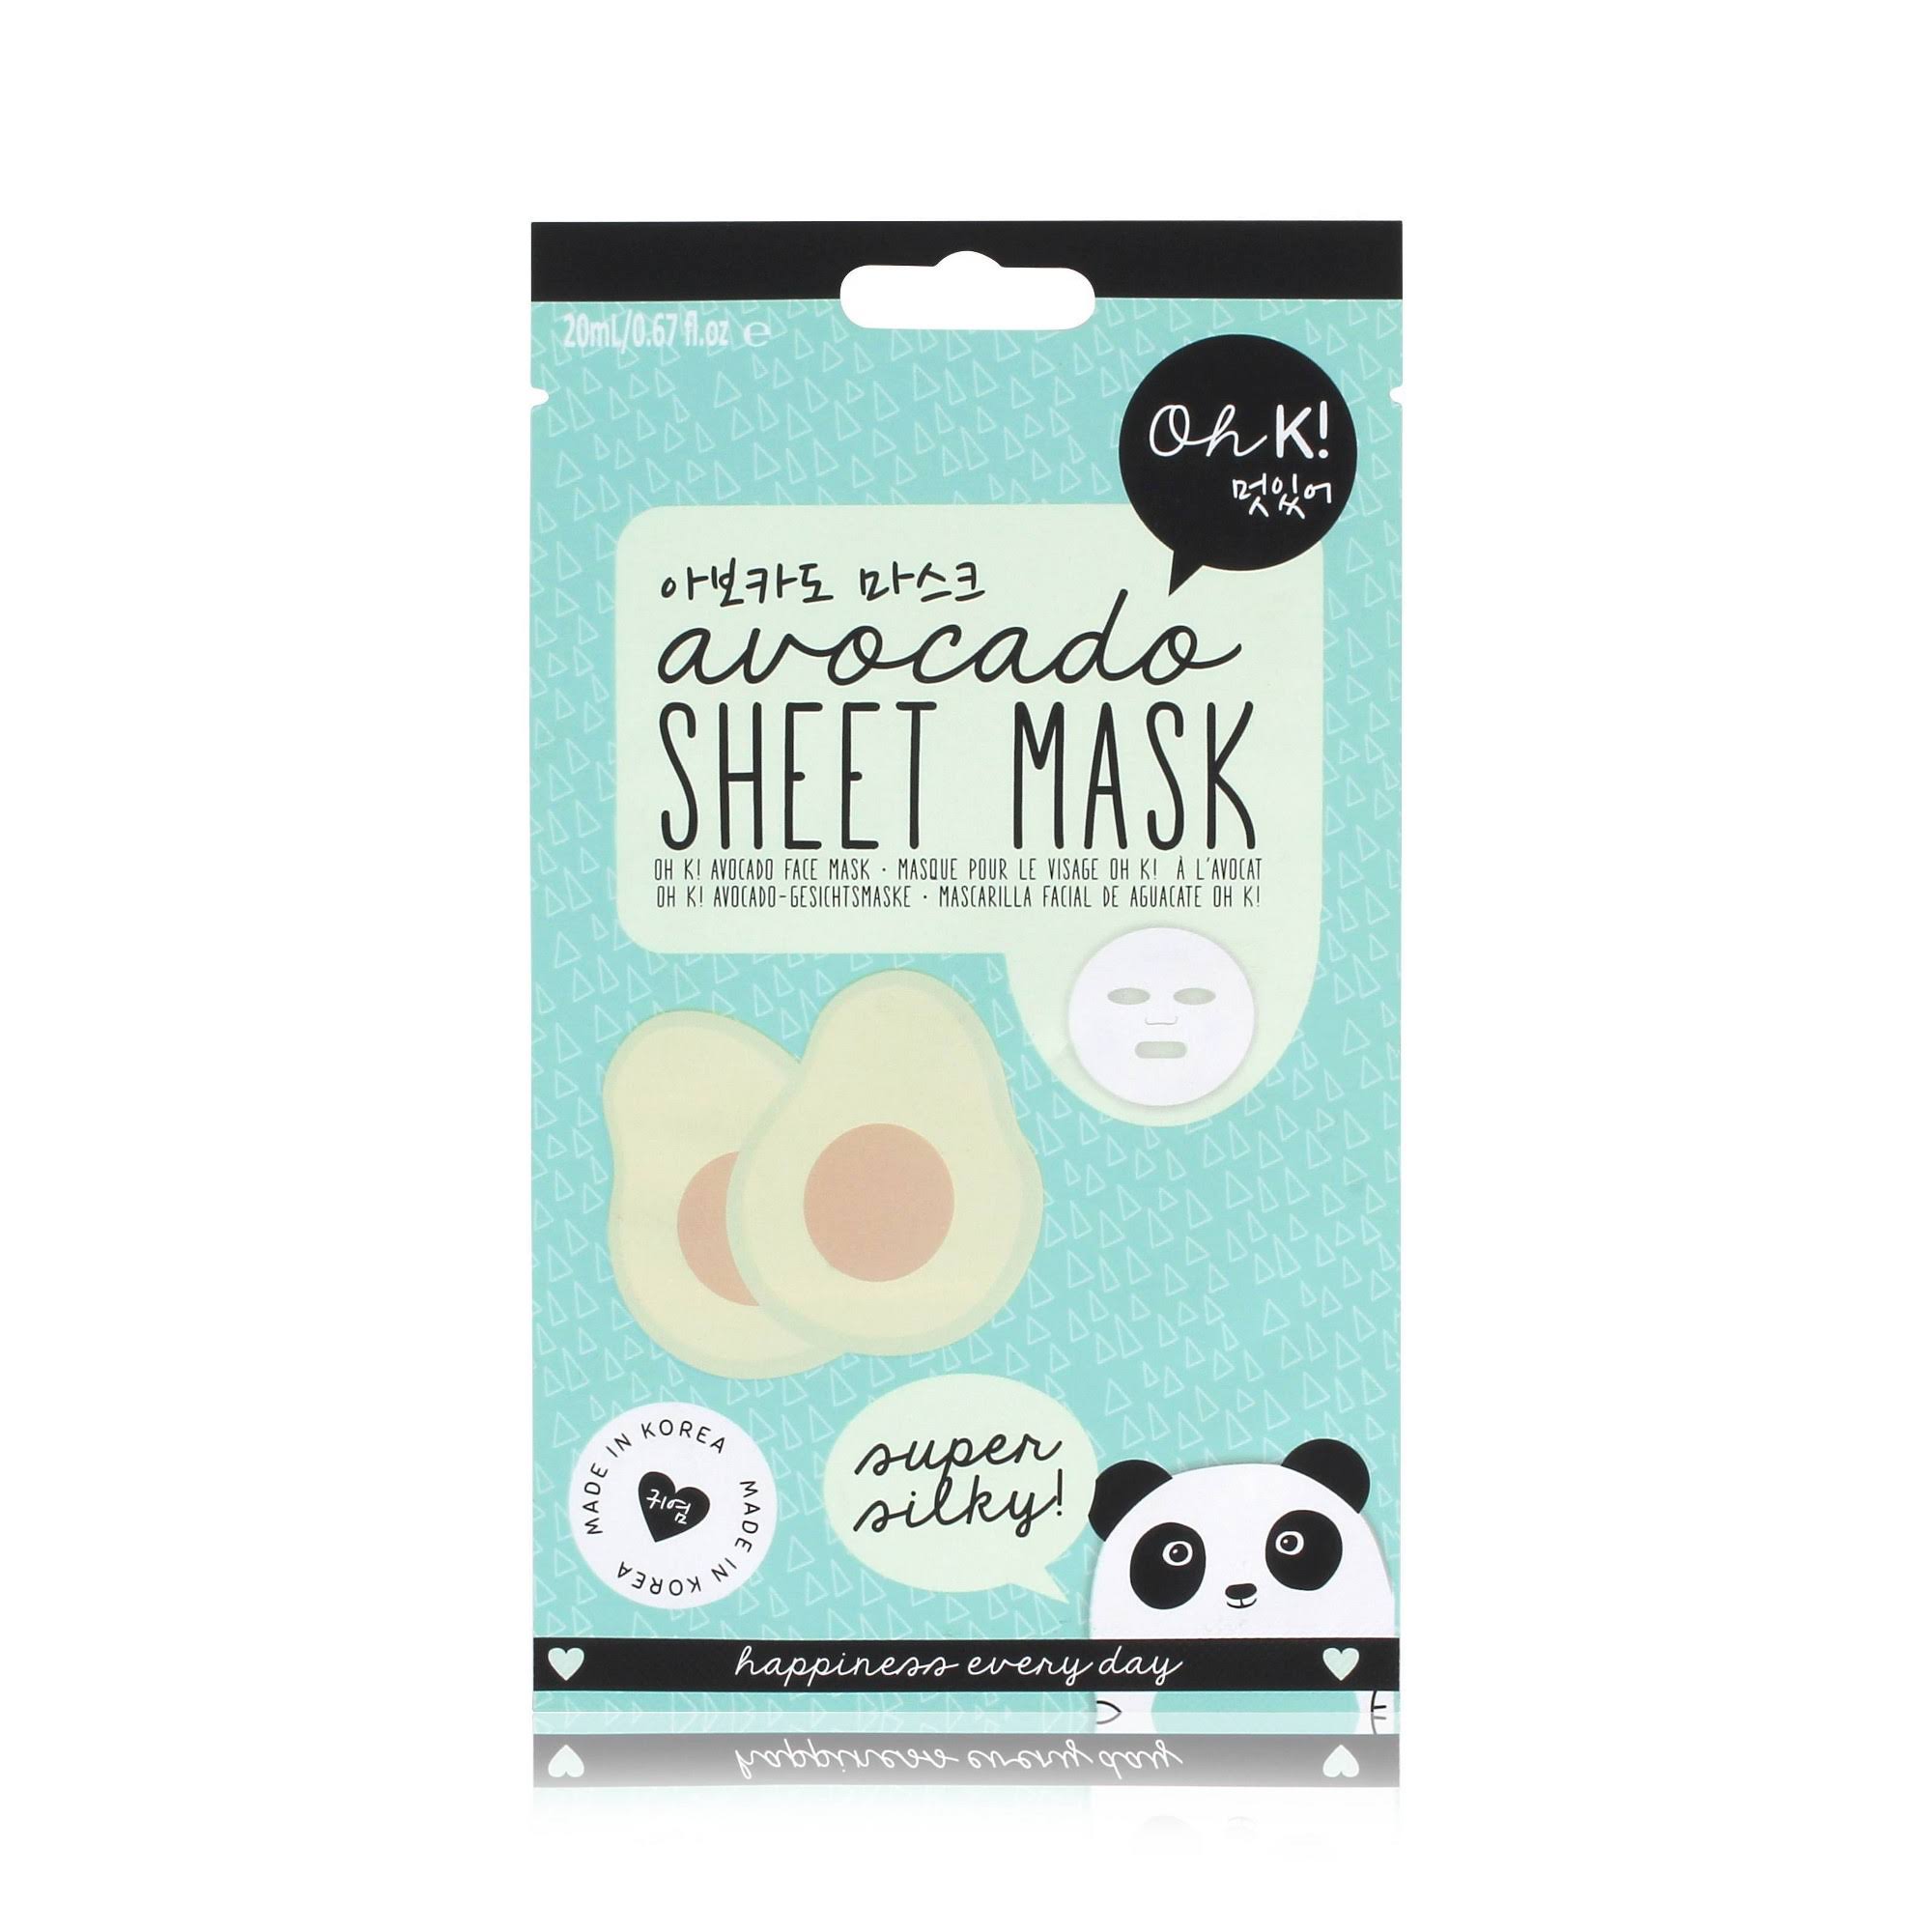 Oh K! Avocado Silky Skin Sheet Face Mask